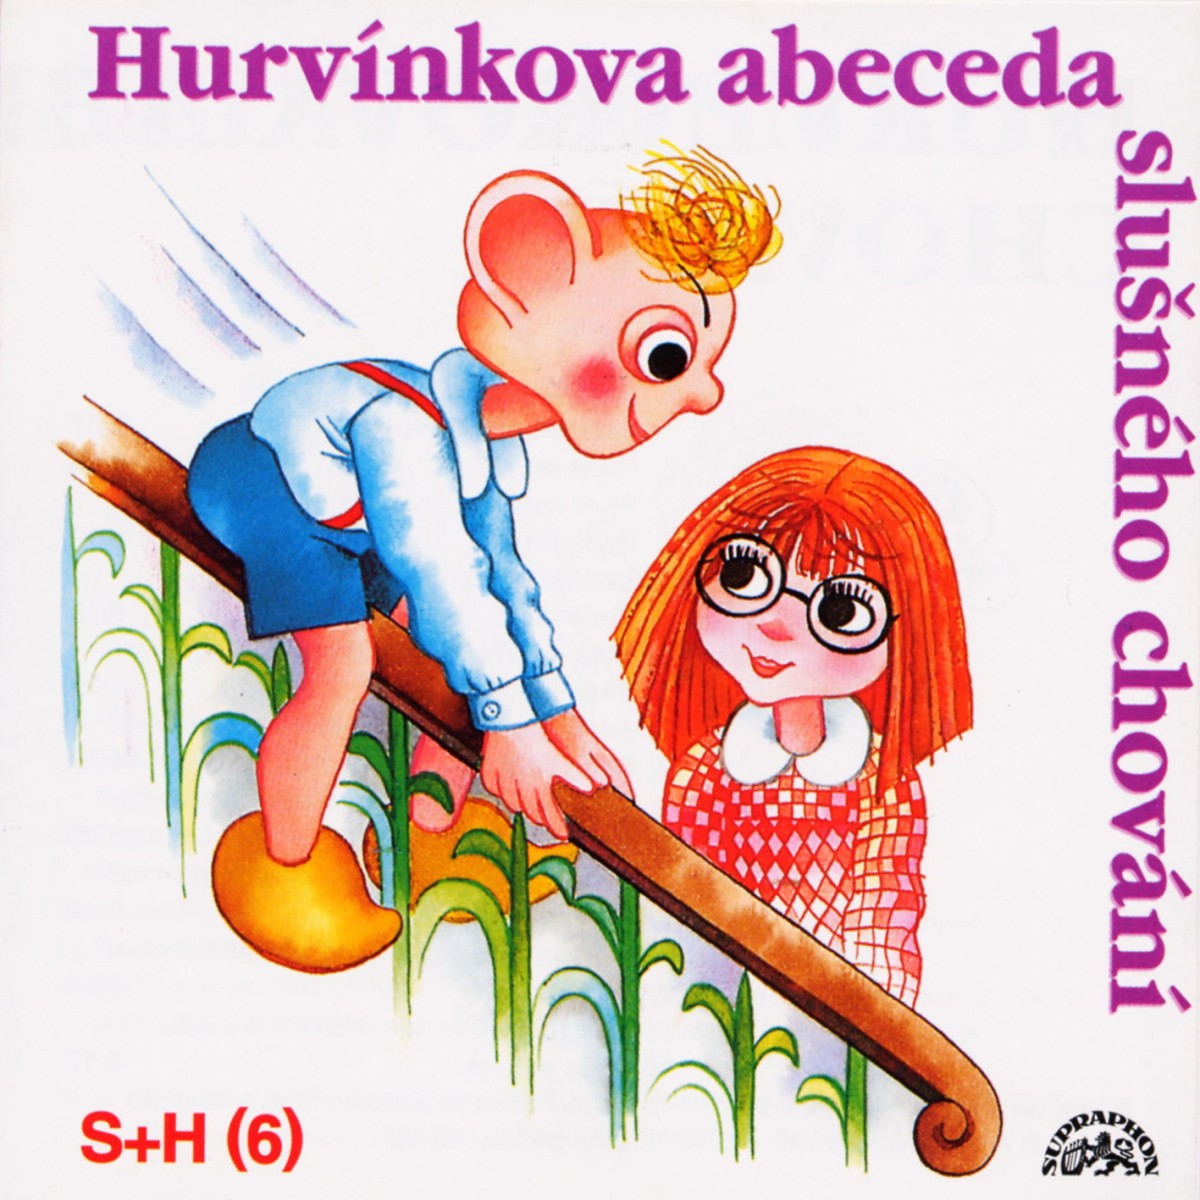 Spejbl a Hurvinek: Hurvinkova abeceda slusneho chovani CD